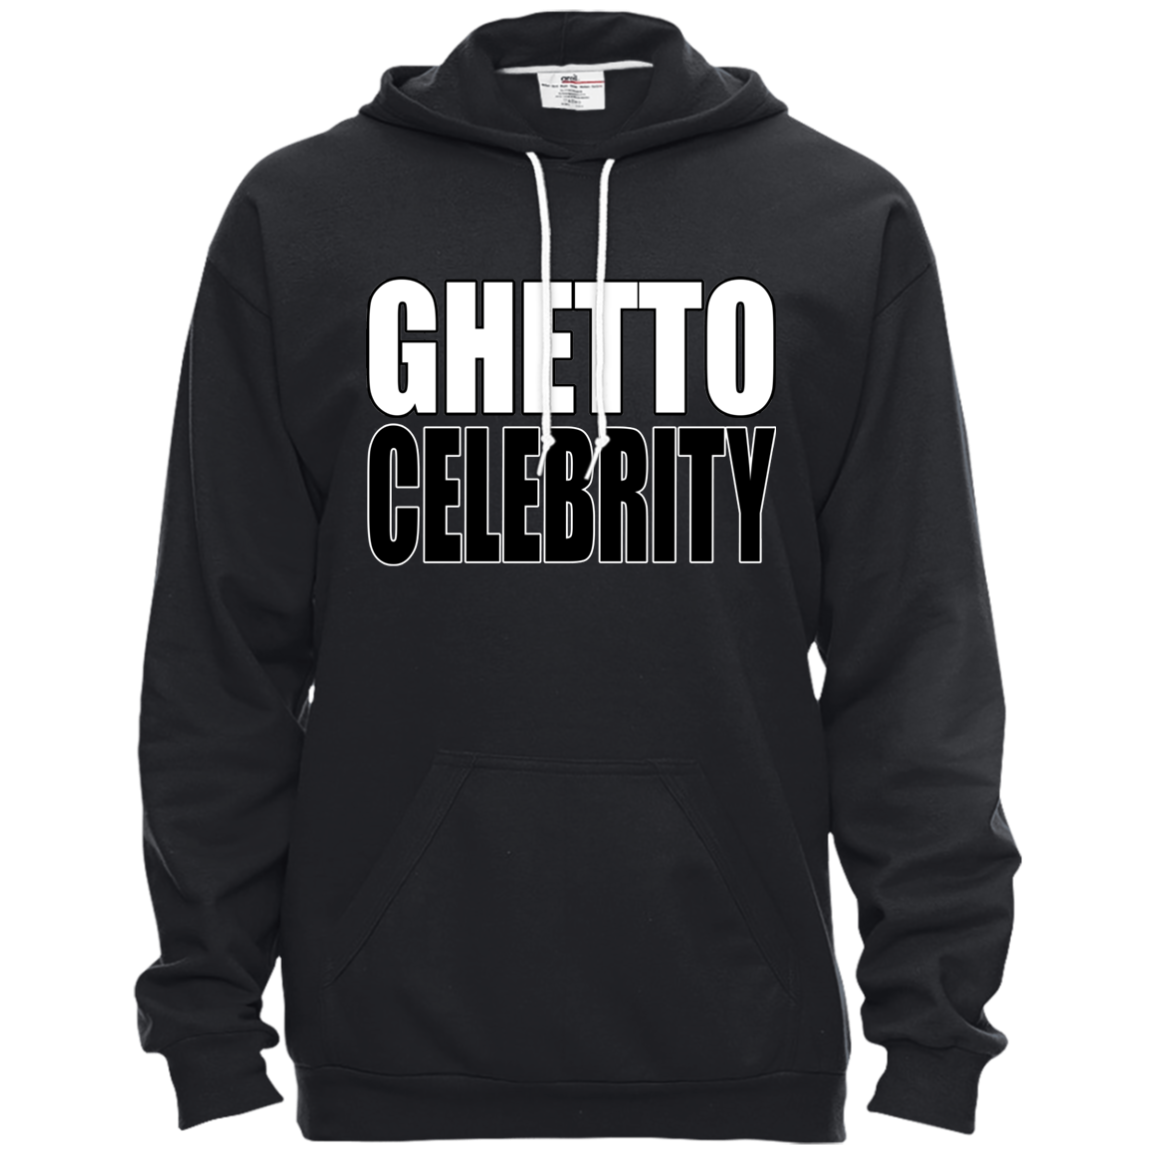 Ghetto Celebrity Pullover Hooded Fleece